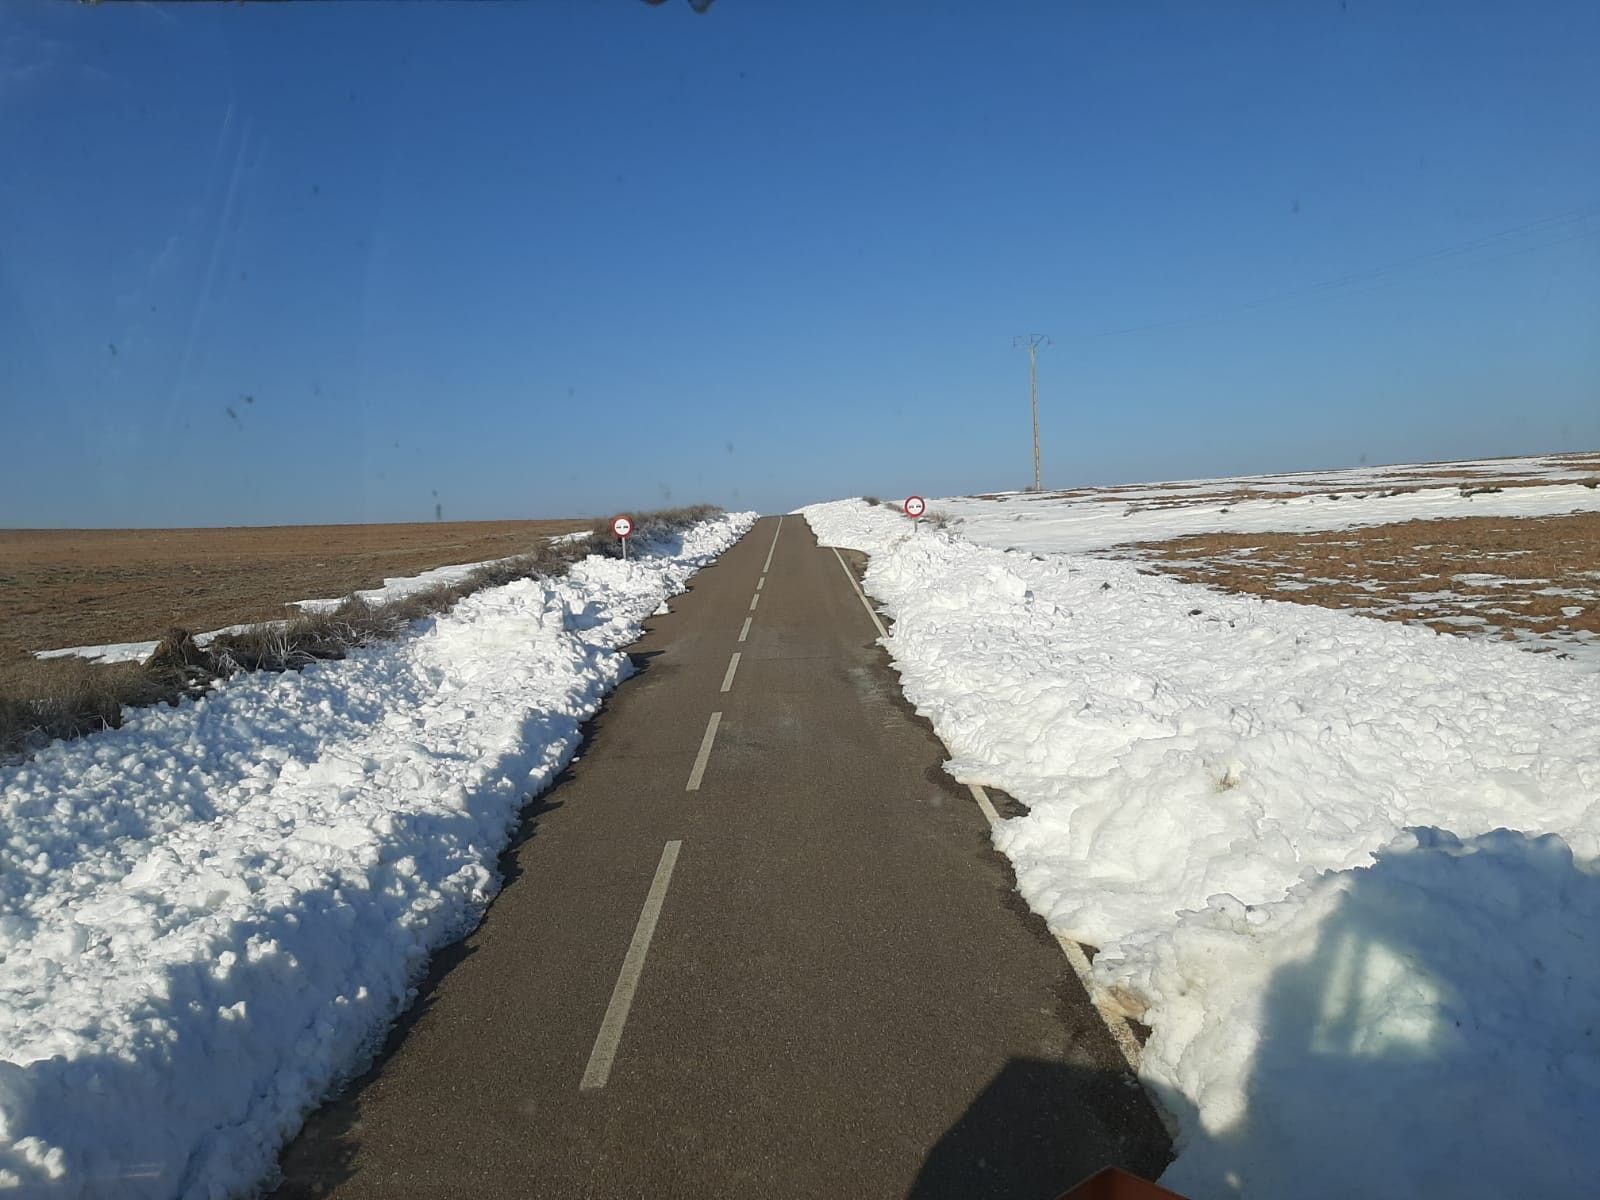 Carretera castrillo guareña fuentelapeña nieve (3)